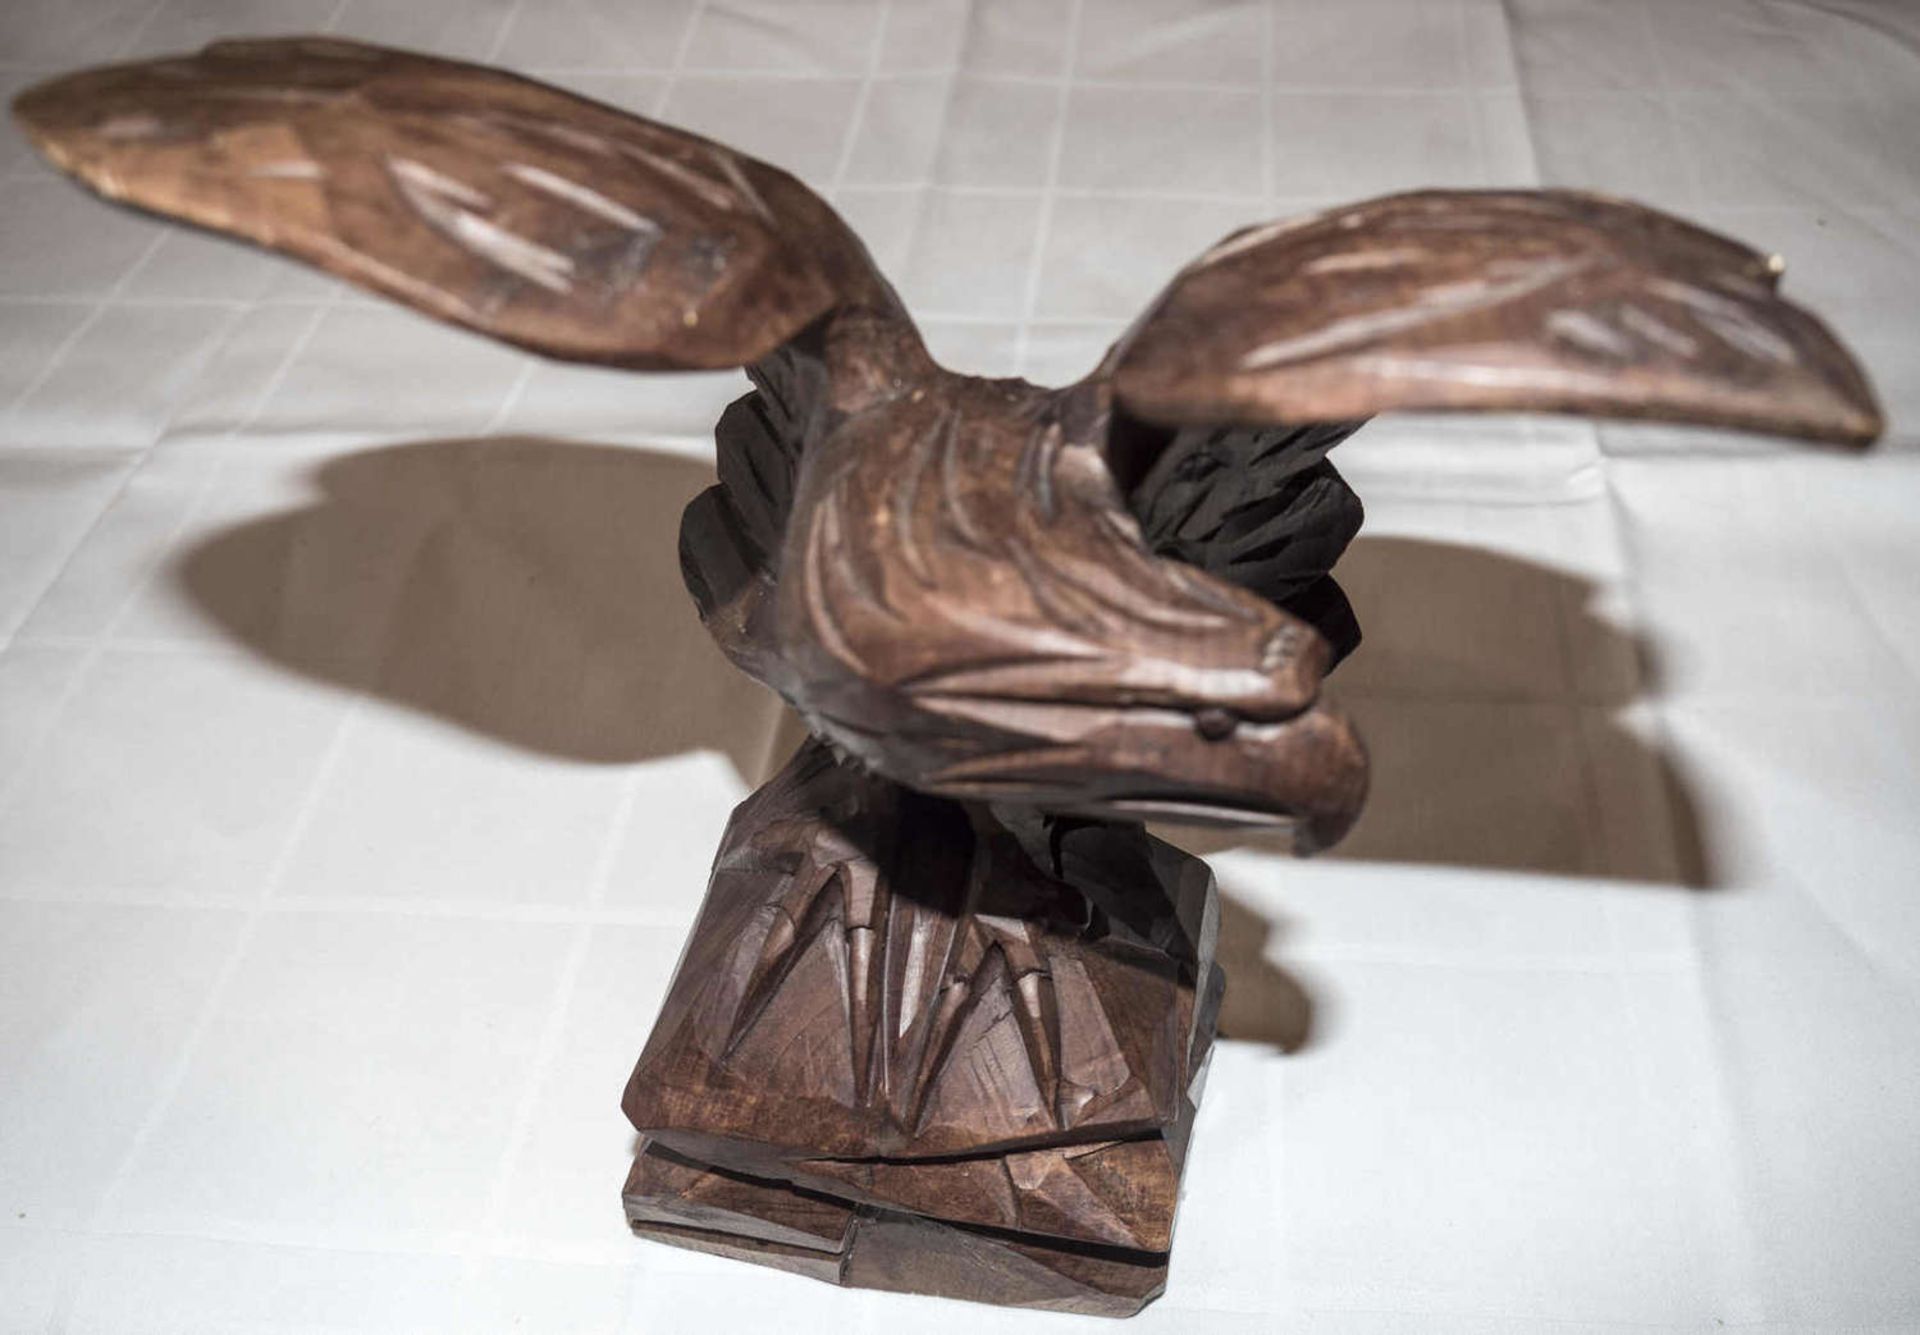 Statue Holzadler, Höhe: ca. 25 cm. Gute Erhaltung.Statue wooden eagle, height: approx. 25 cm. Good